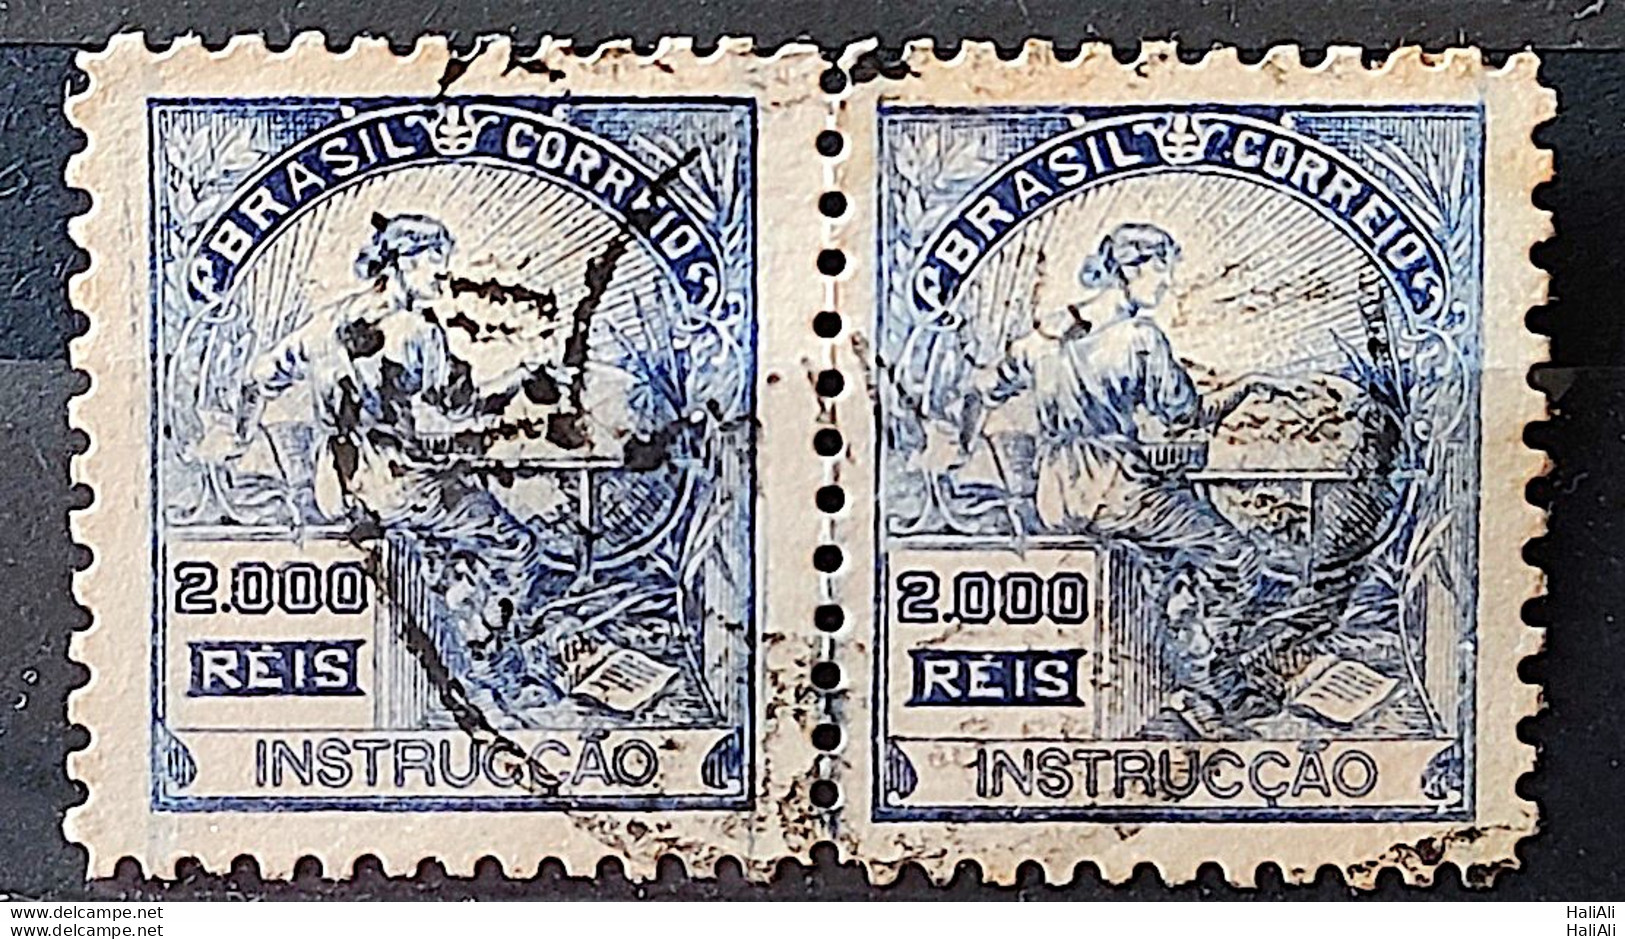 Brazil Regular Stamp Cod RHM 294 Grandpa Instruction 2000 Reis Filigree L 1934 Par Circulated - Usados